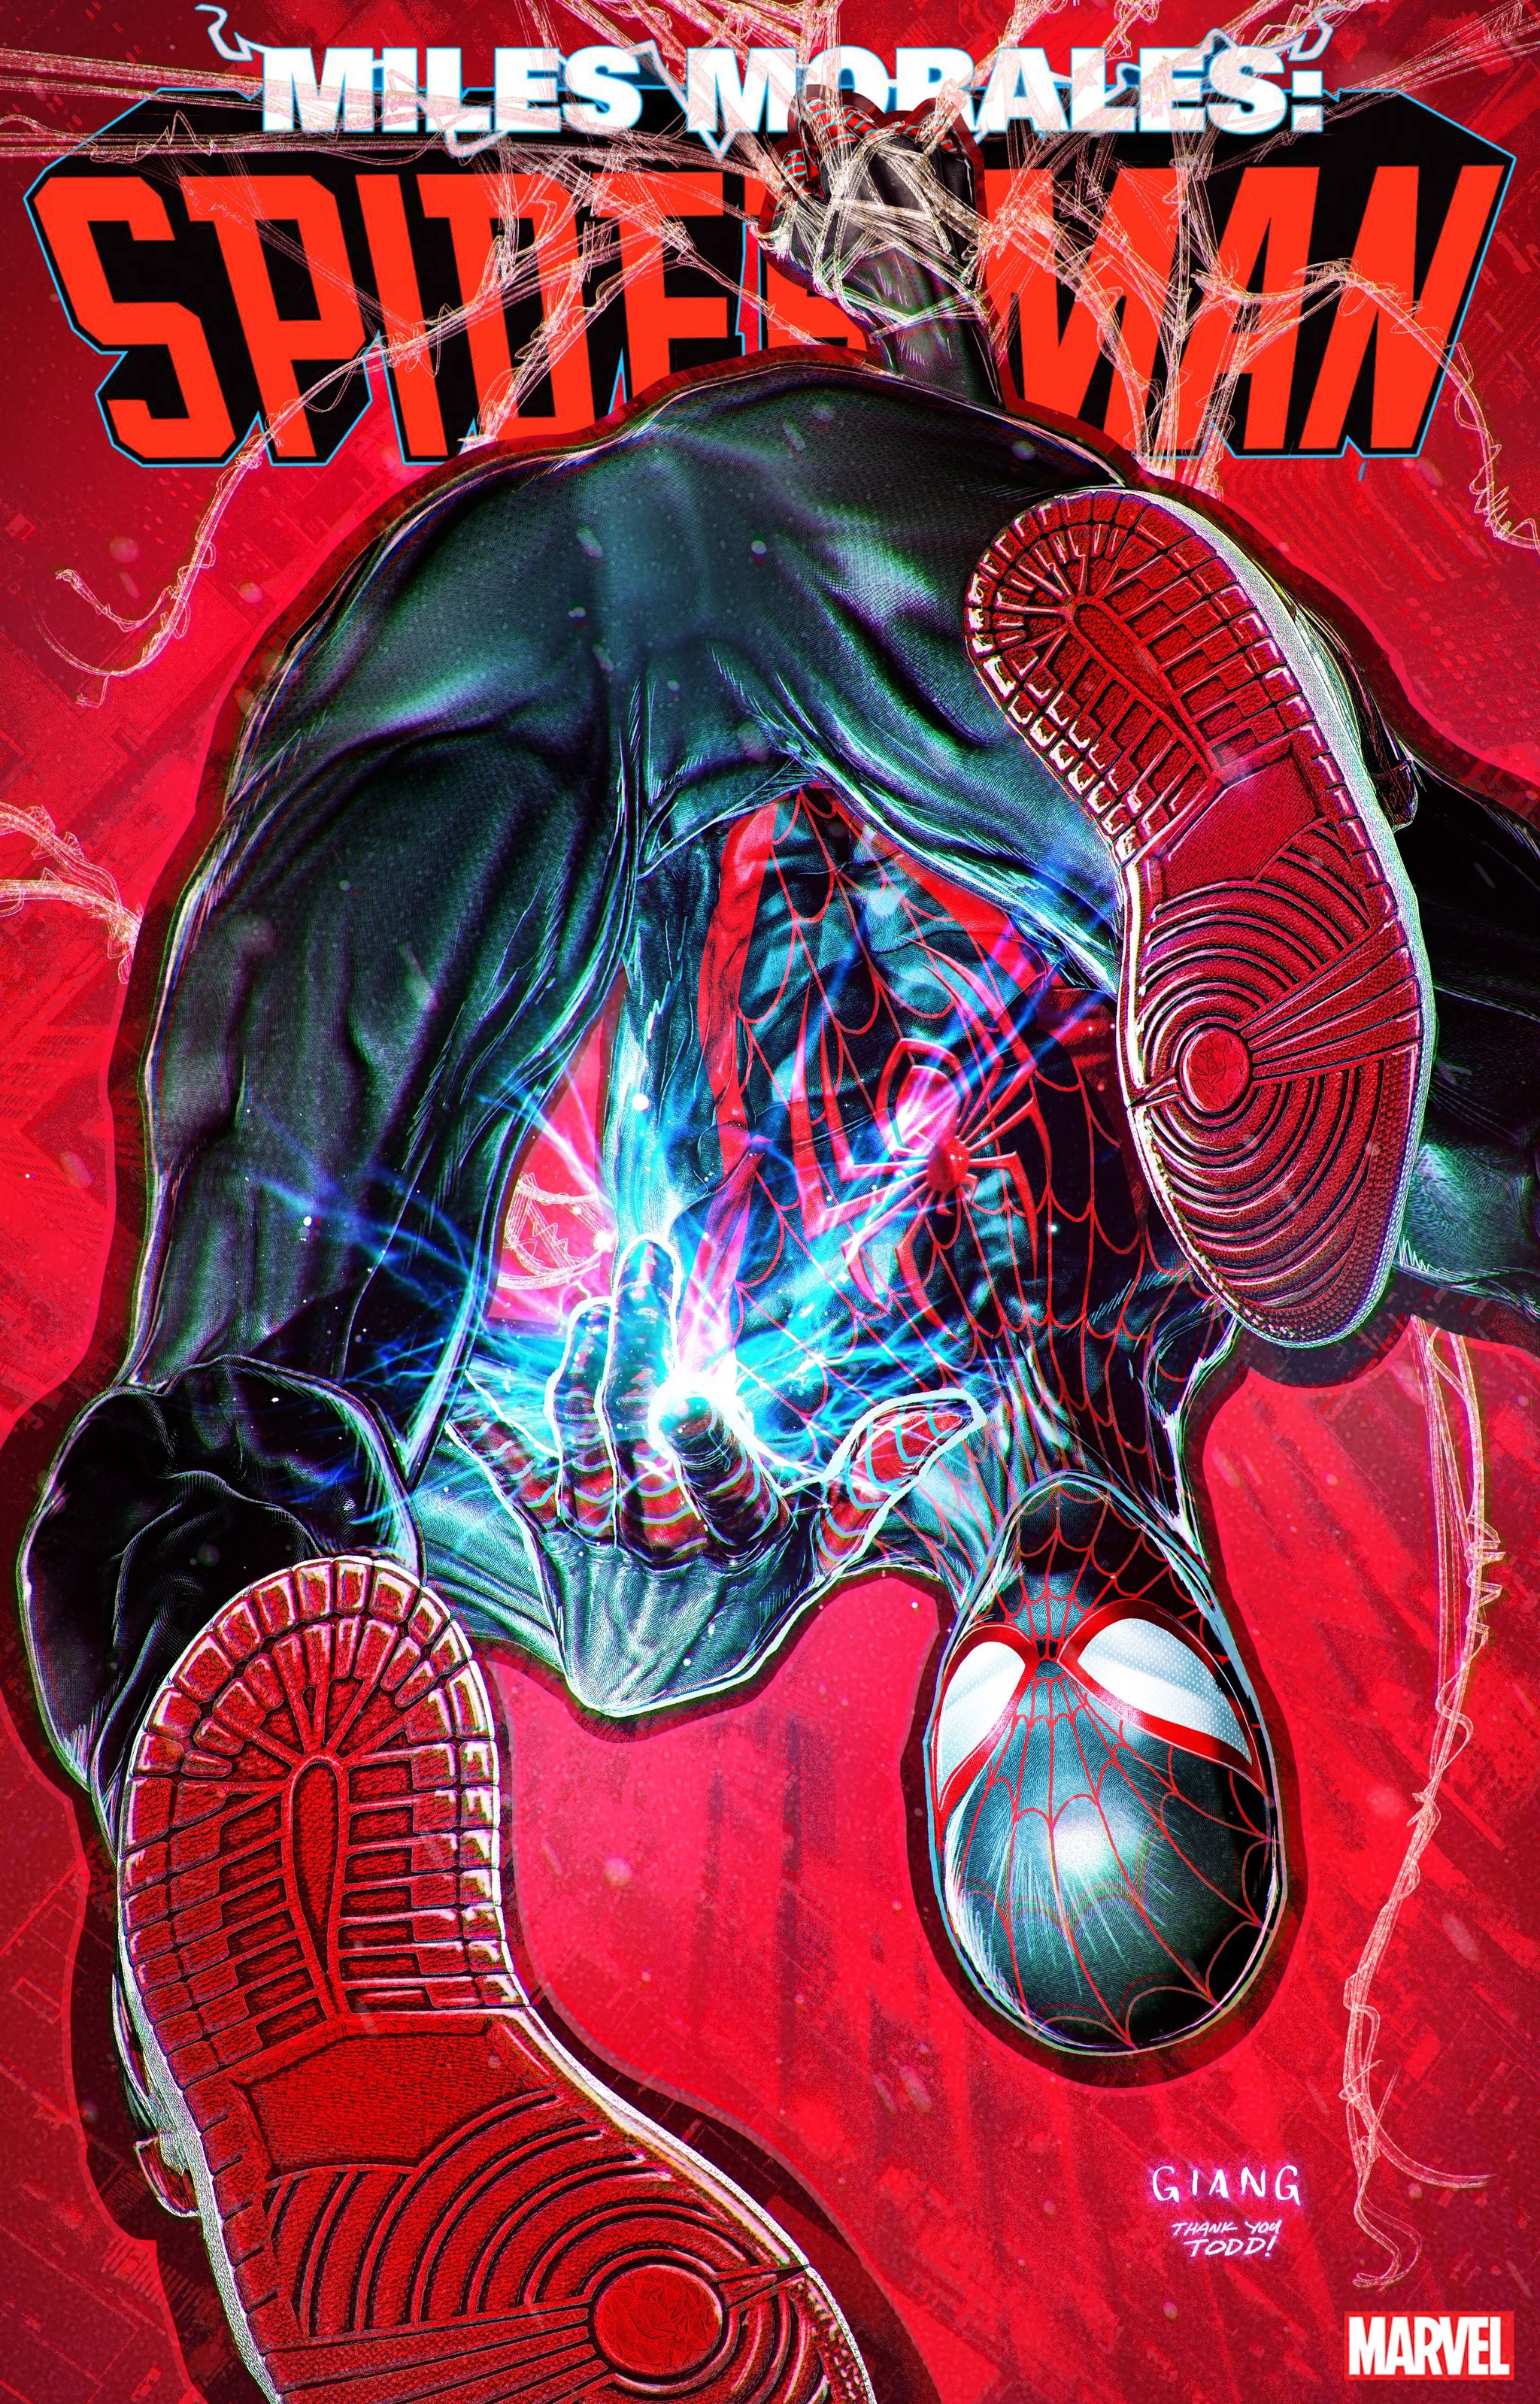 MILES MORALES: SPIDER-MAN #1